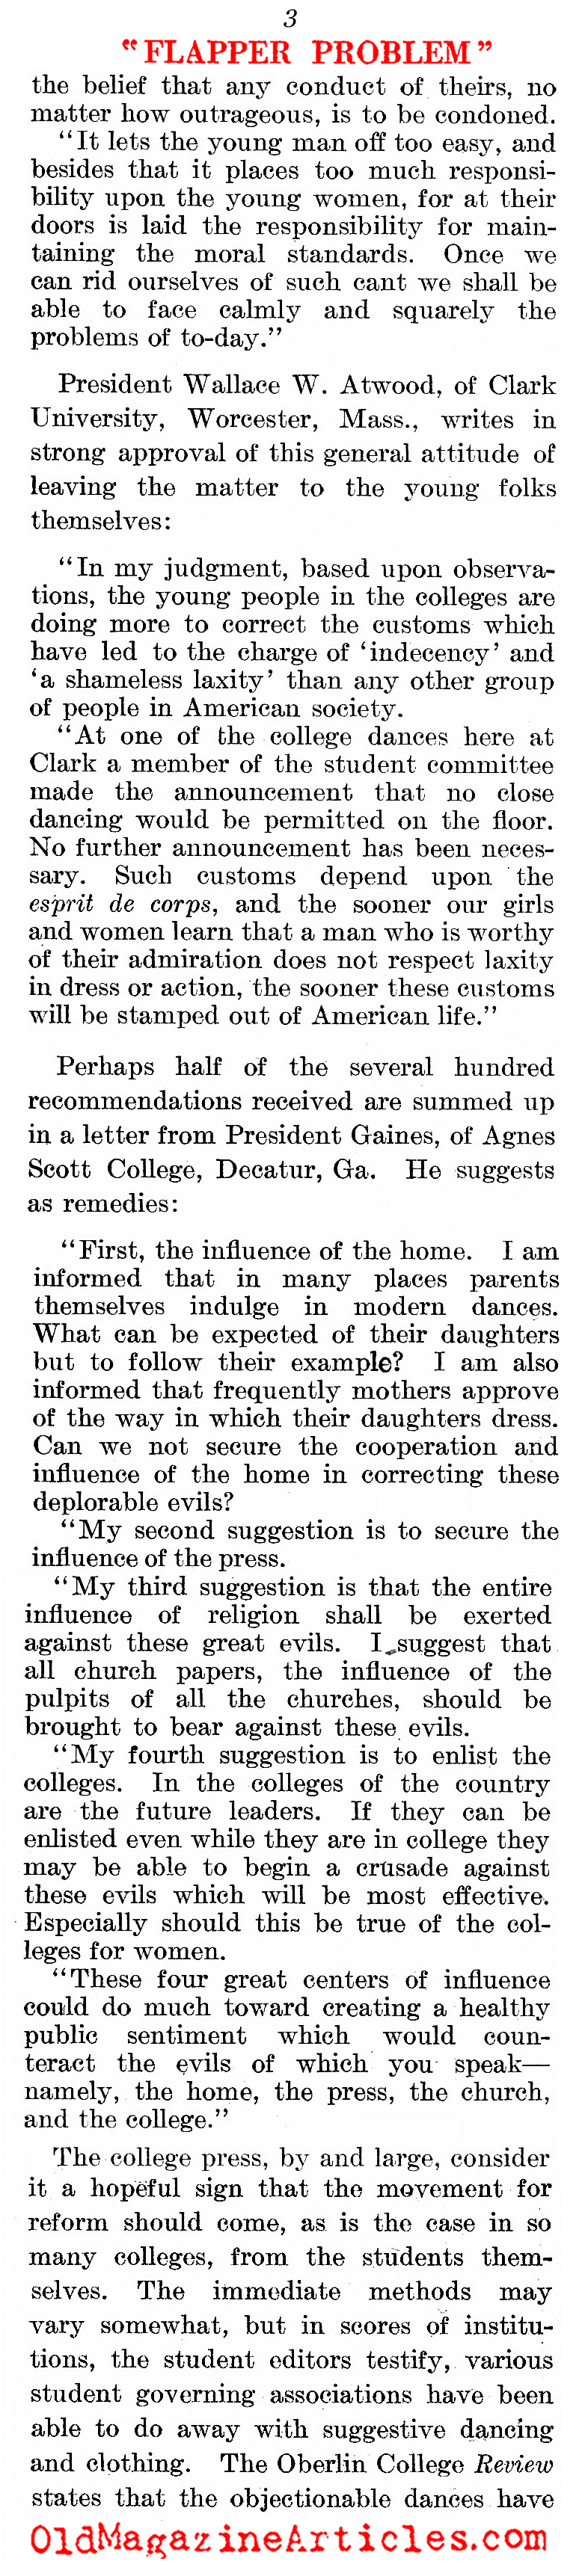 The Flapper Debate (Literary Digest, 1921)